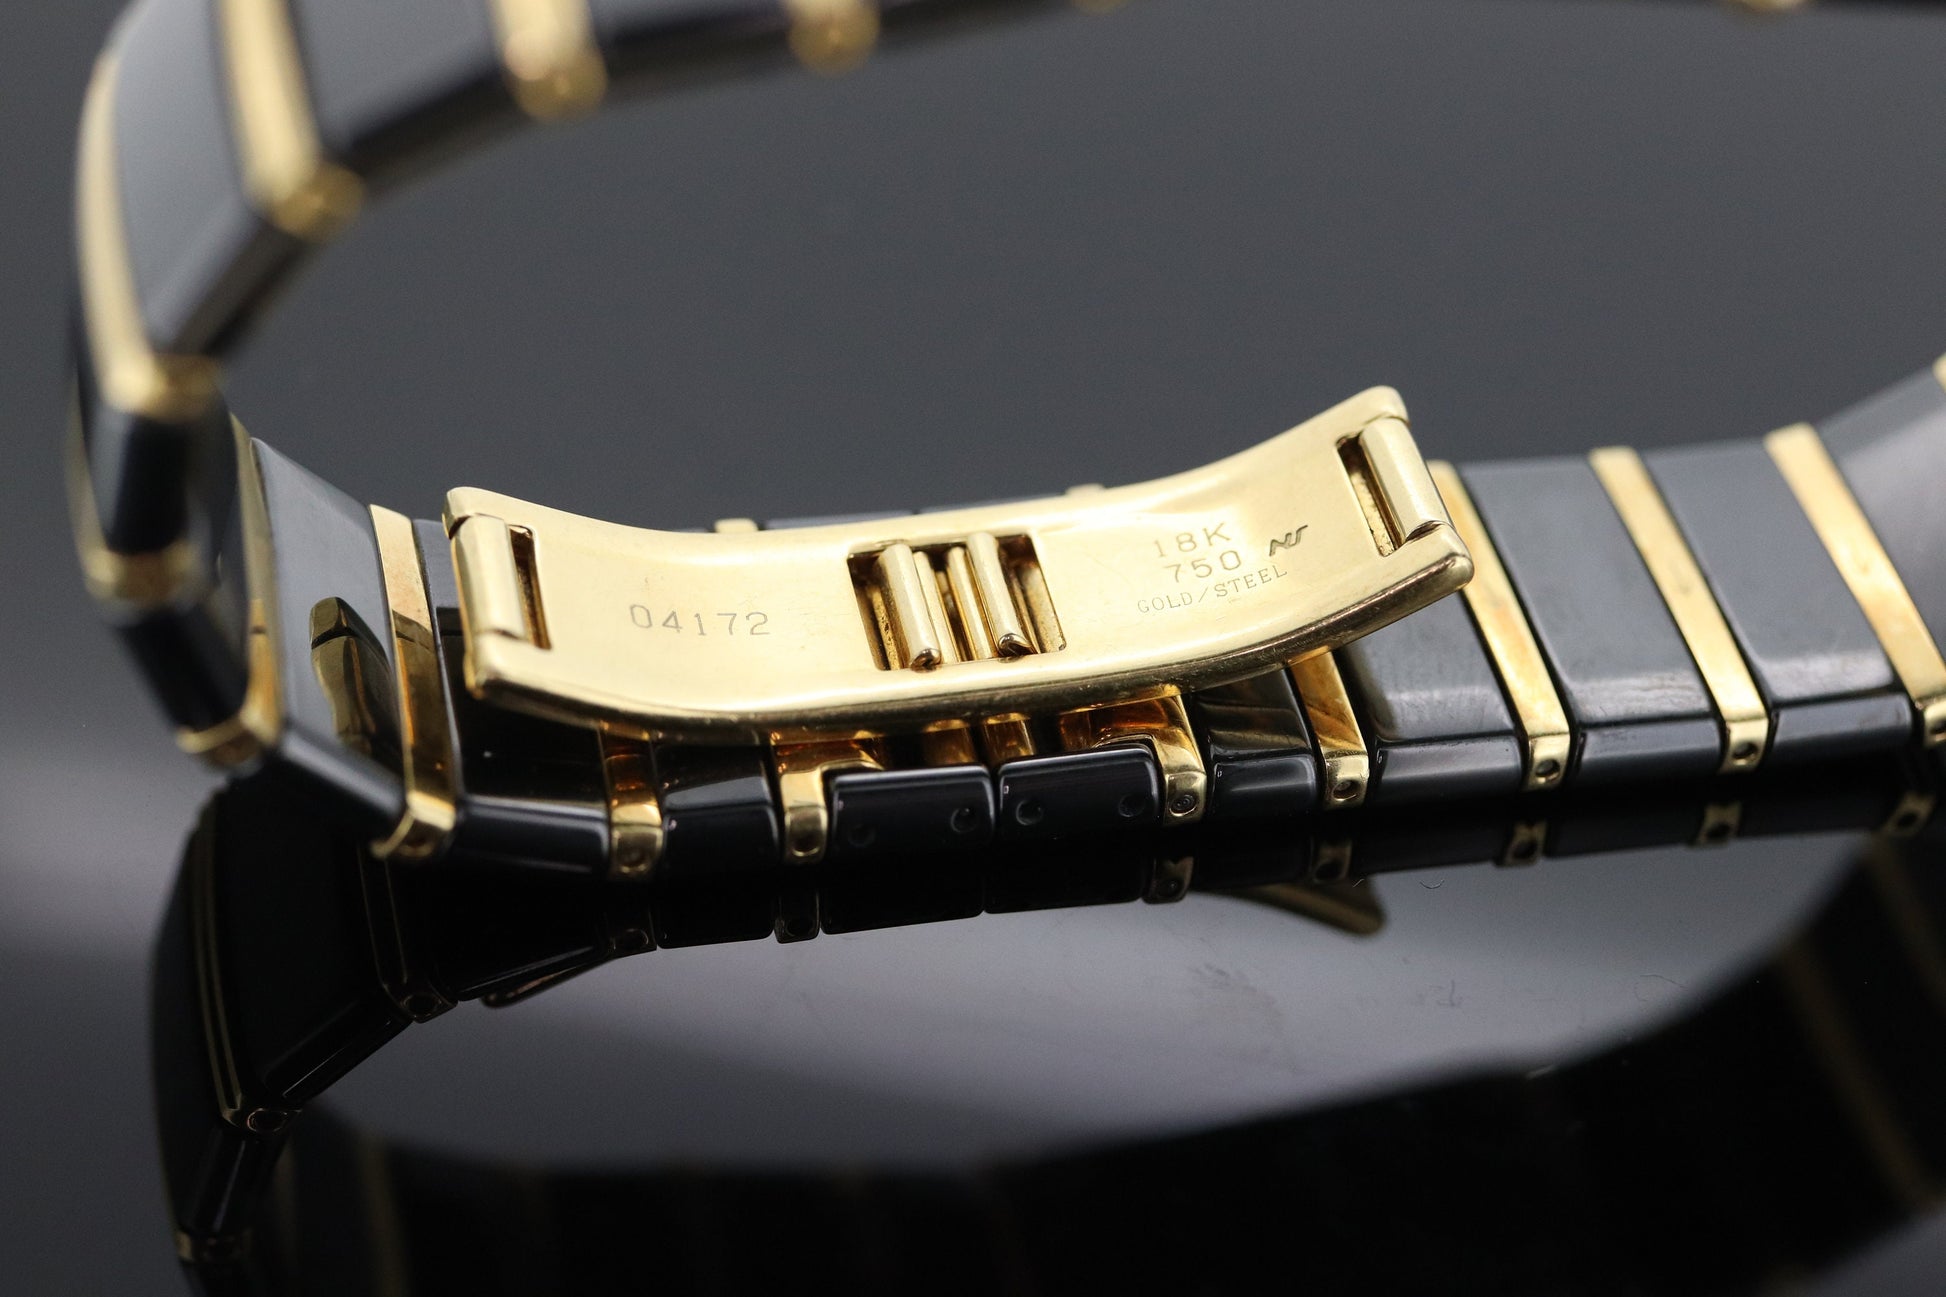 RADO 18k High Tech Ceramic and Stainless Steel Watch. RADO DiaStar Bracelet Watch. st(374)